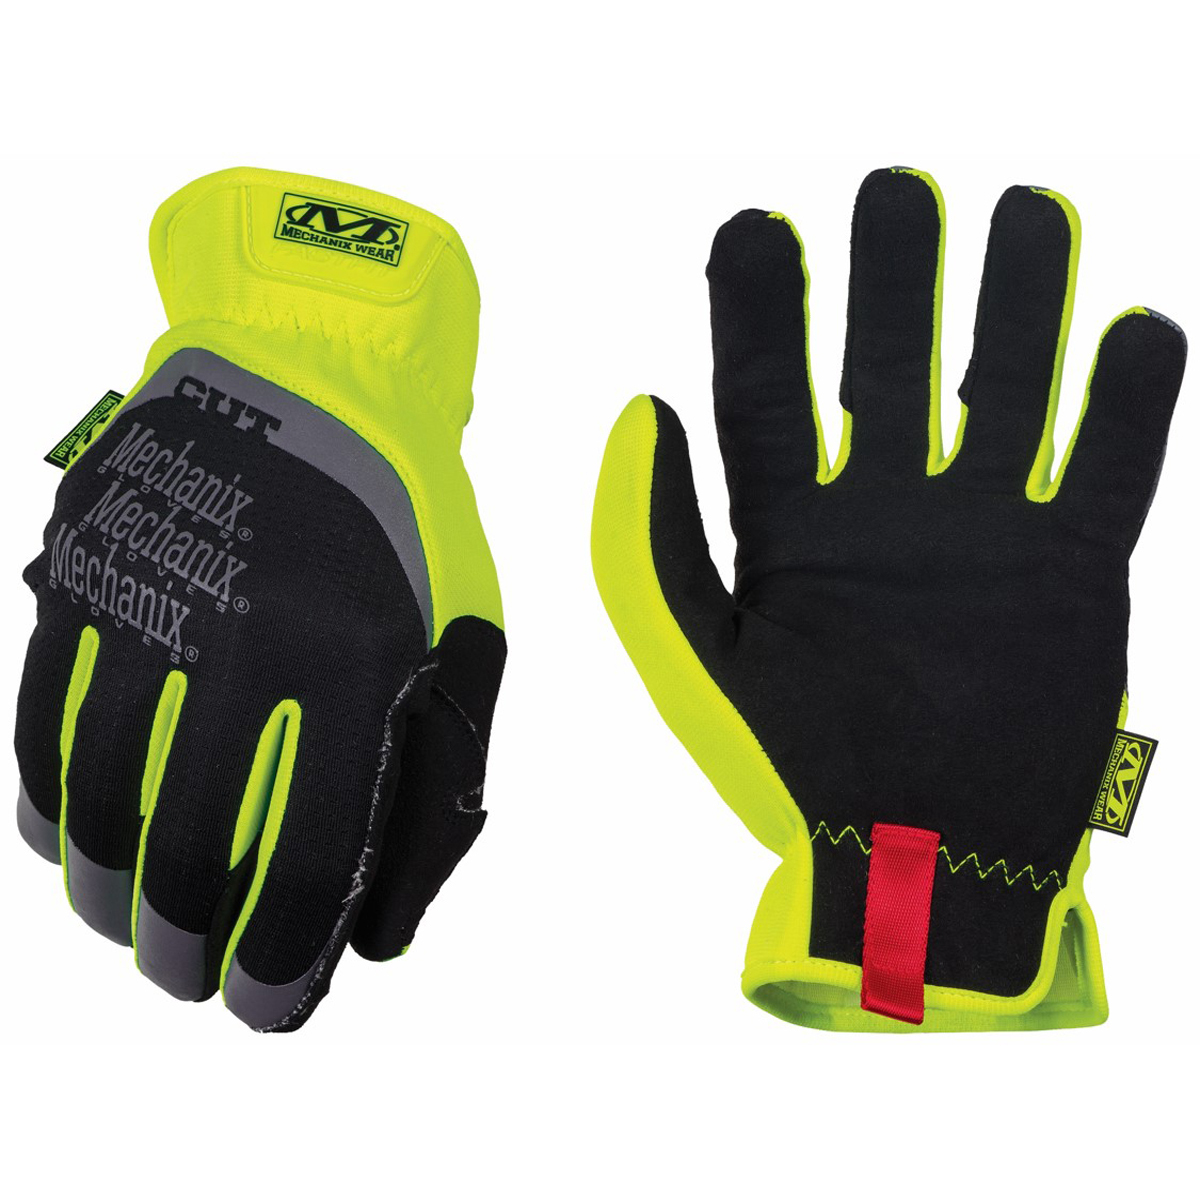 Cut resistant gloves for sale online